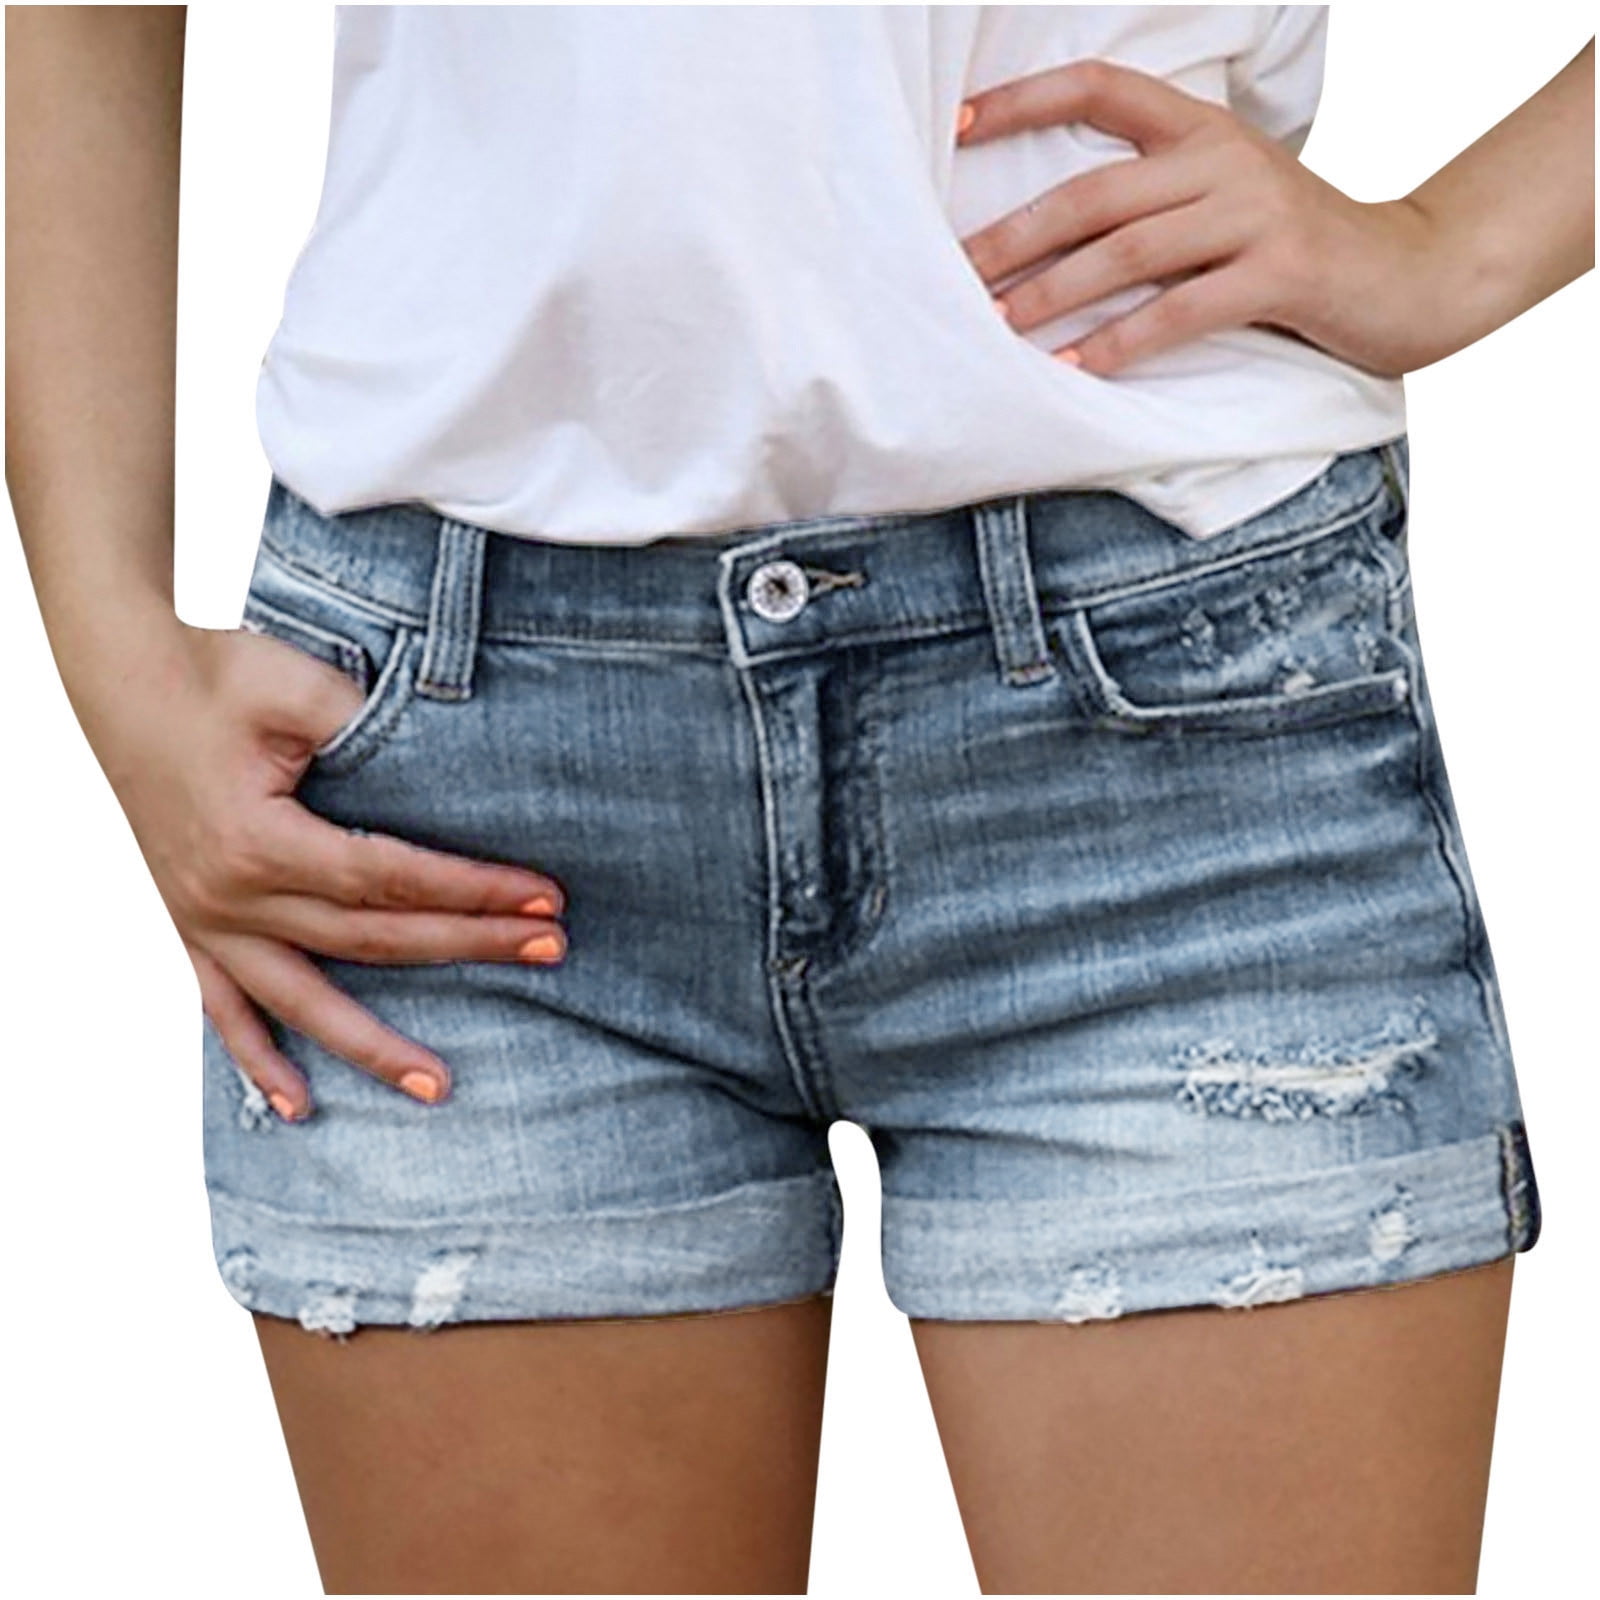 Women Lace UP Ripped Stretch Jeans Denim Bottom Shorts High Waist Hot Pants  | eBay